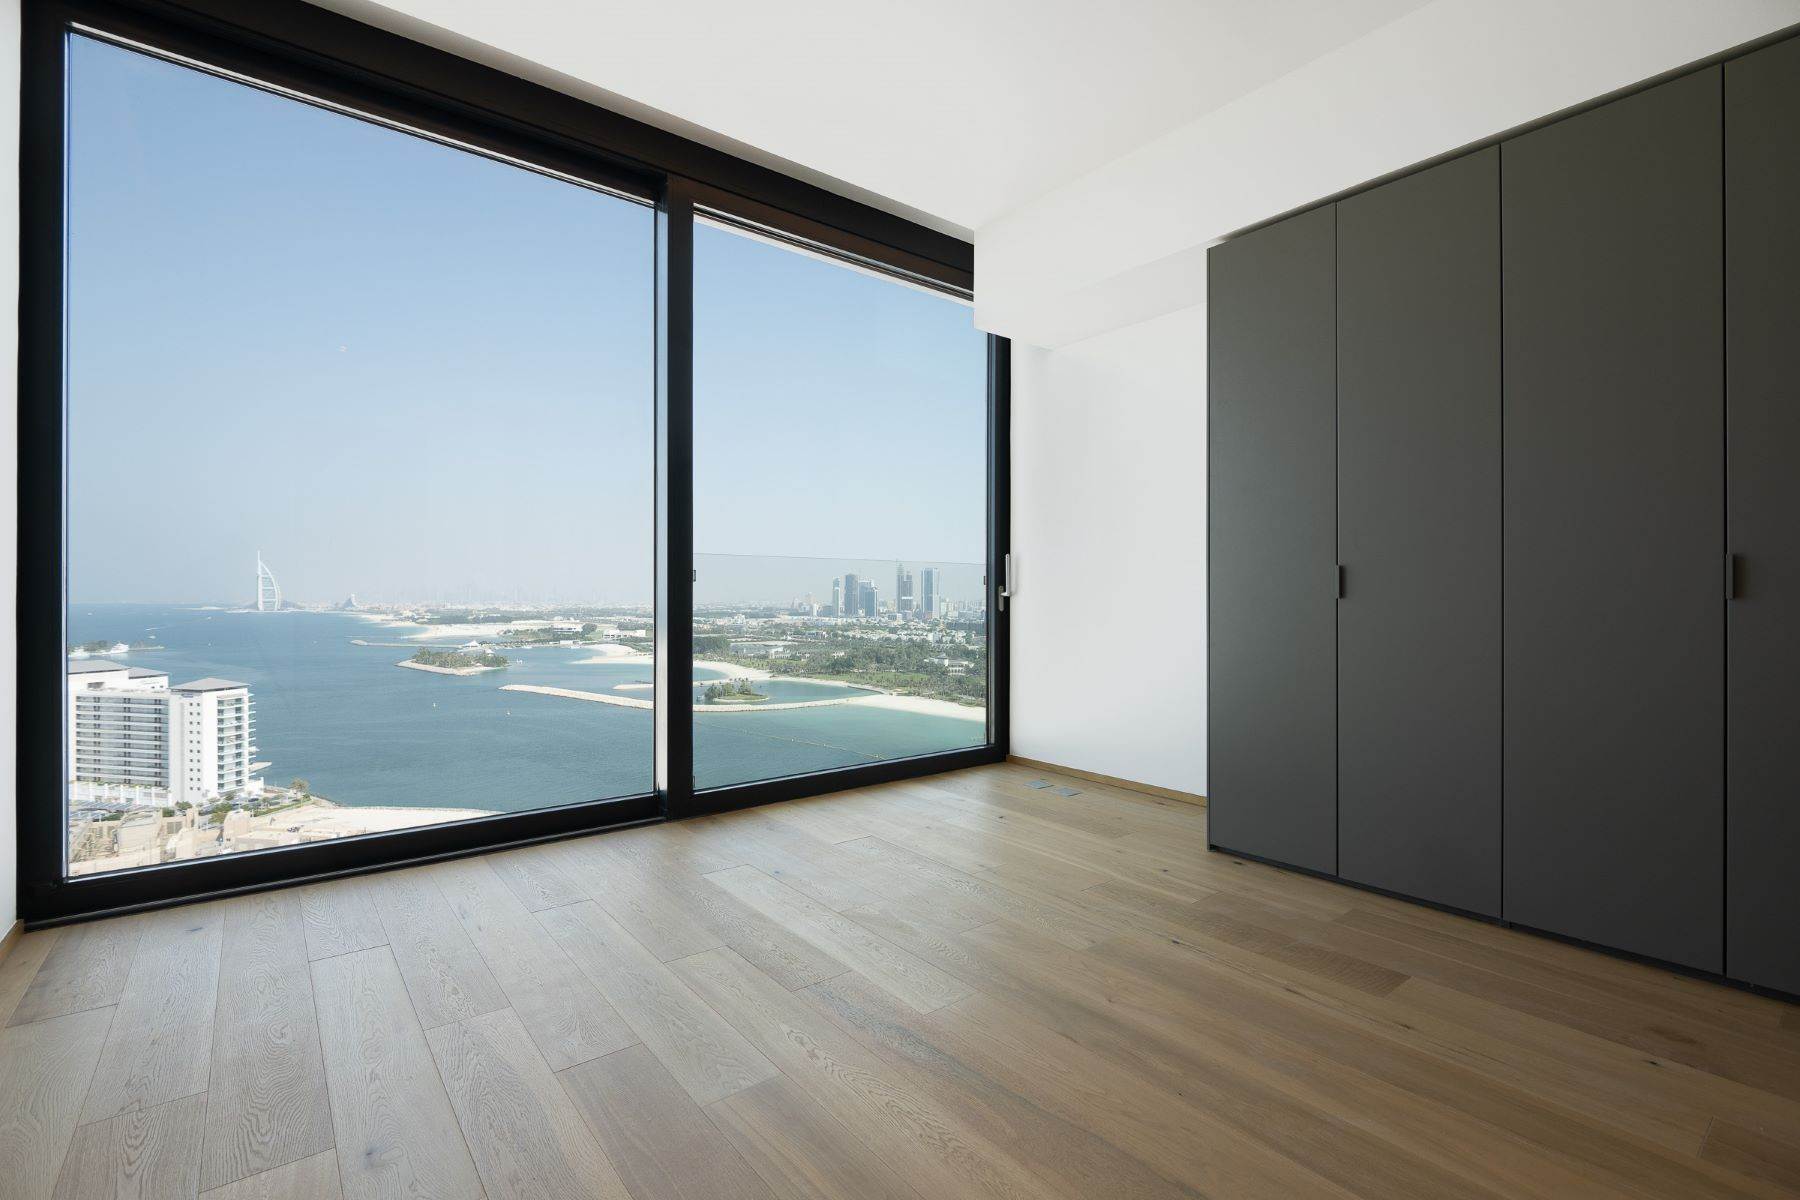 18. Apartments at Dubai, Dubai United Arab Emirates